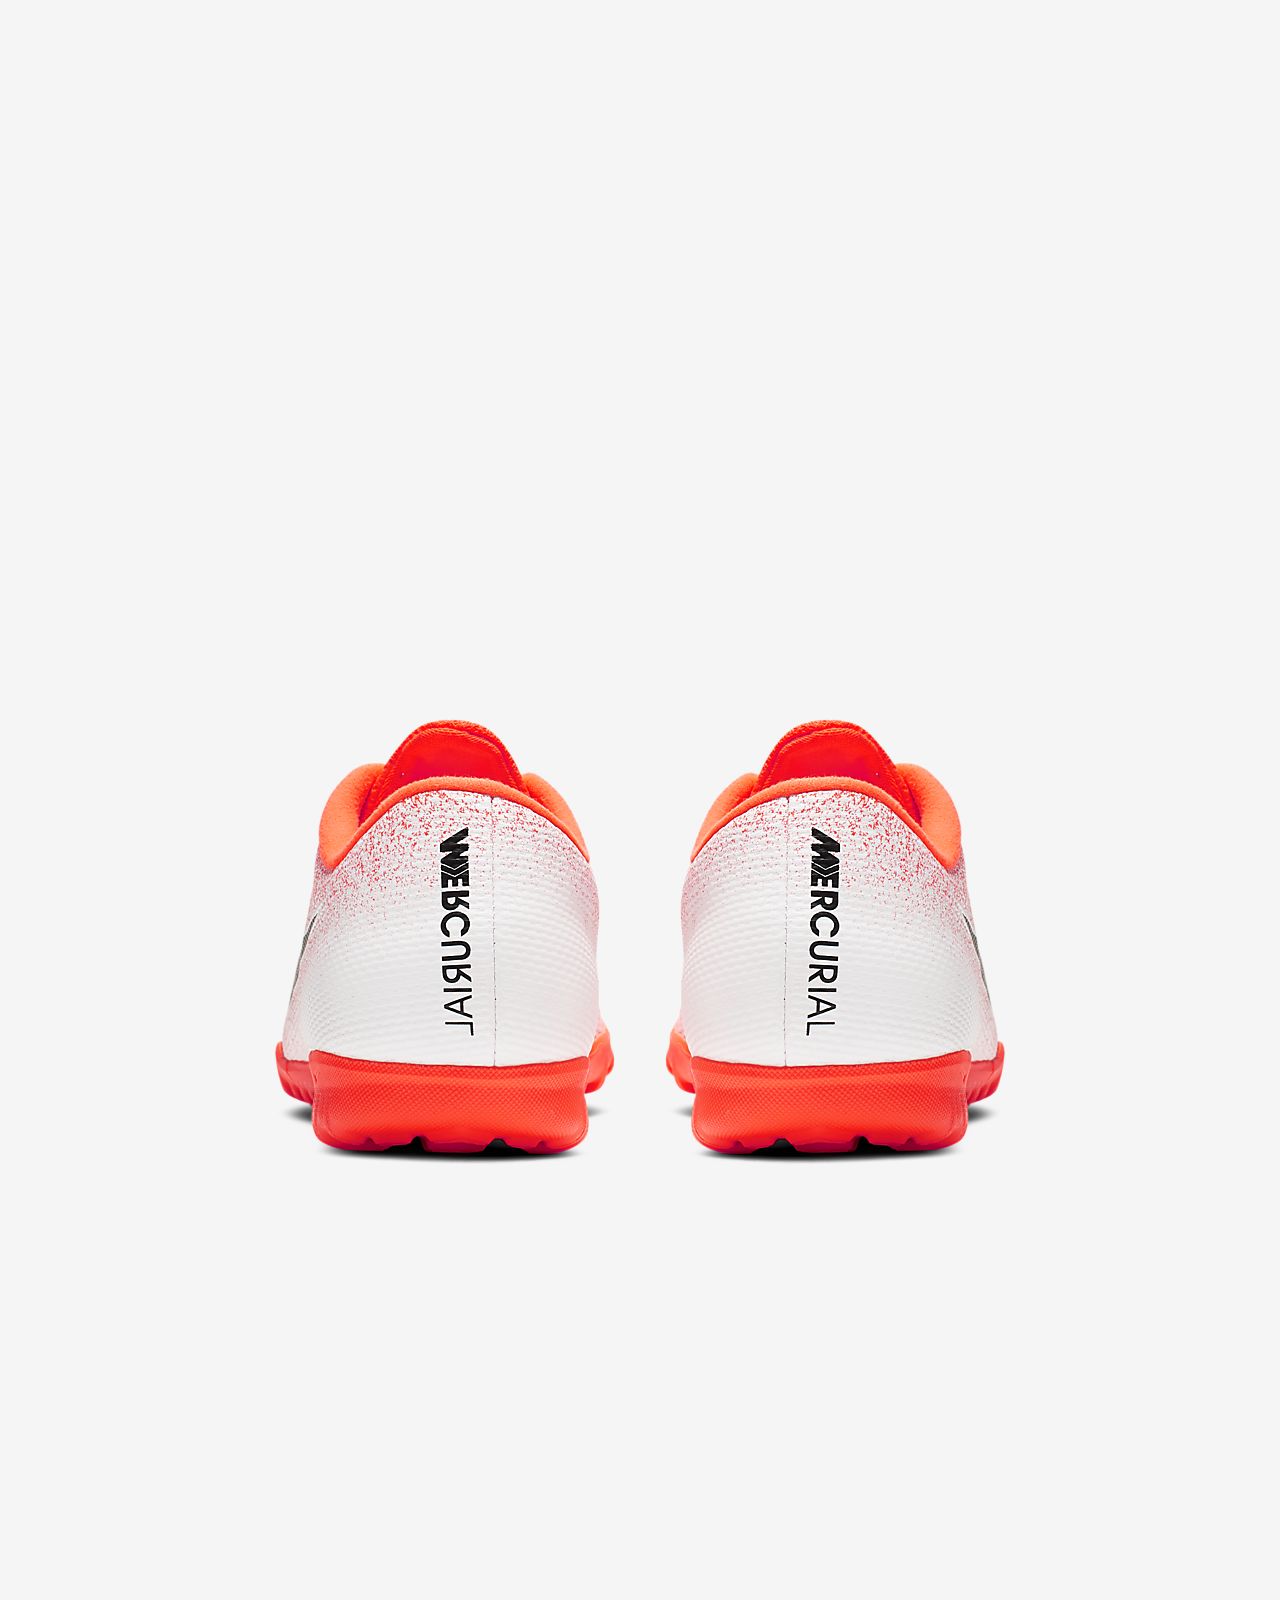 Nike Mercurial Vapor XI BHM SE Boot UK Size 10 Limited